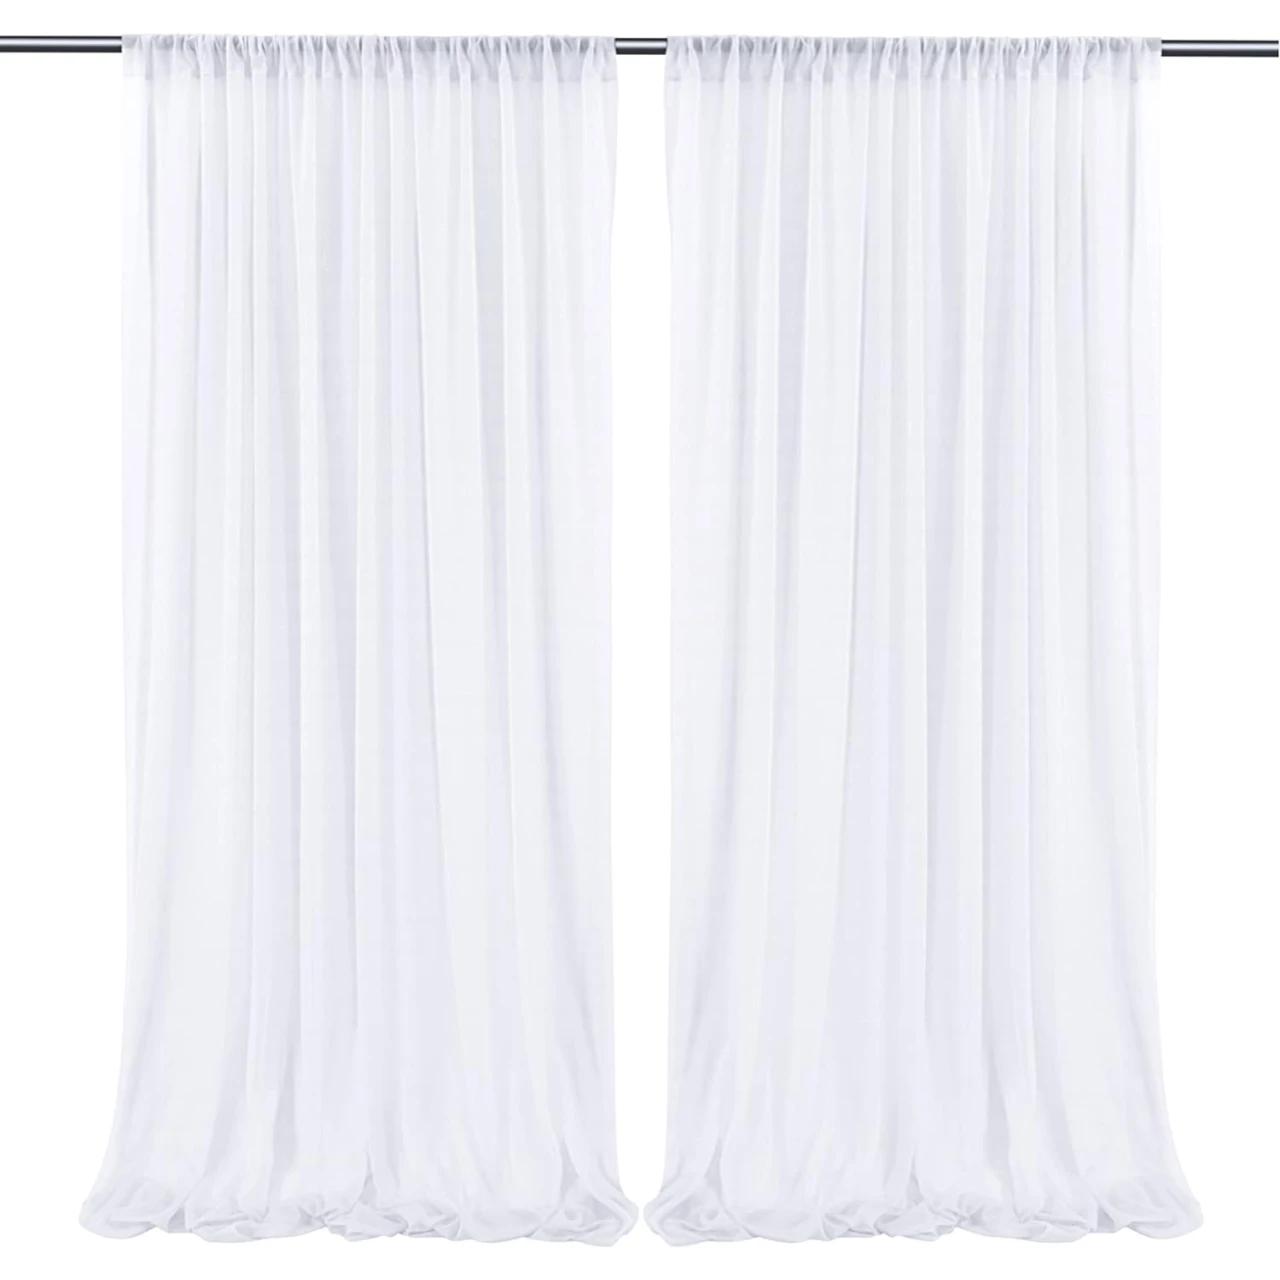 10ft x 10ft White Chiffon Backdrop Curtains, Wrinkle-Free Sheer Chiffon Fabric Curtain Drapes